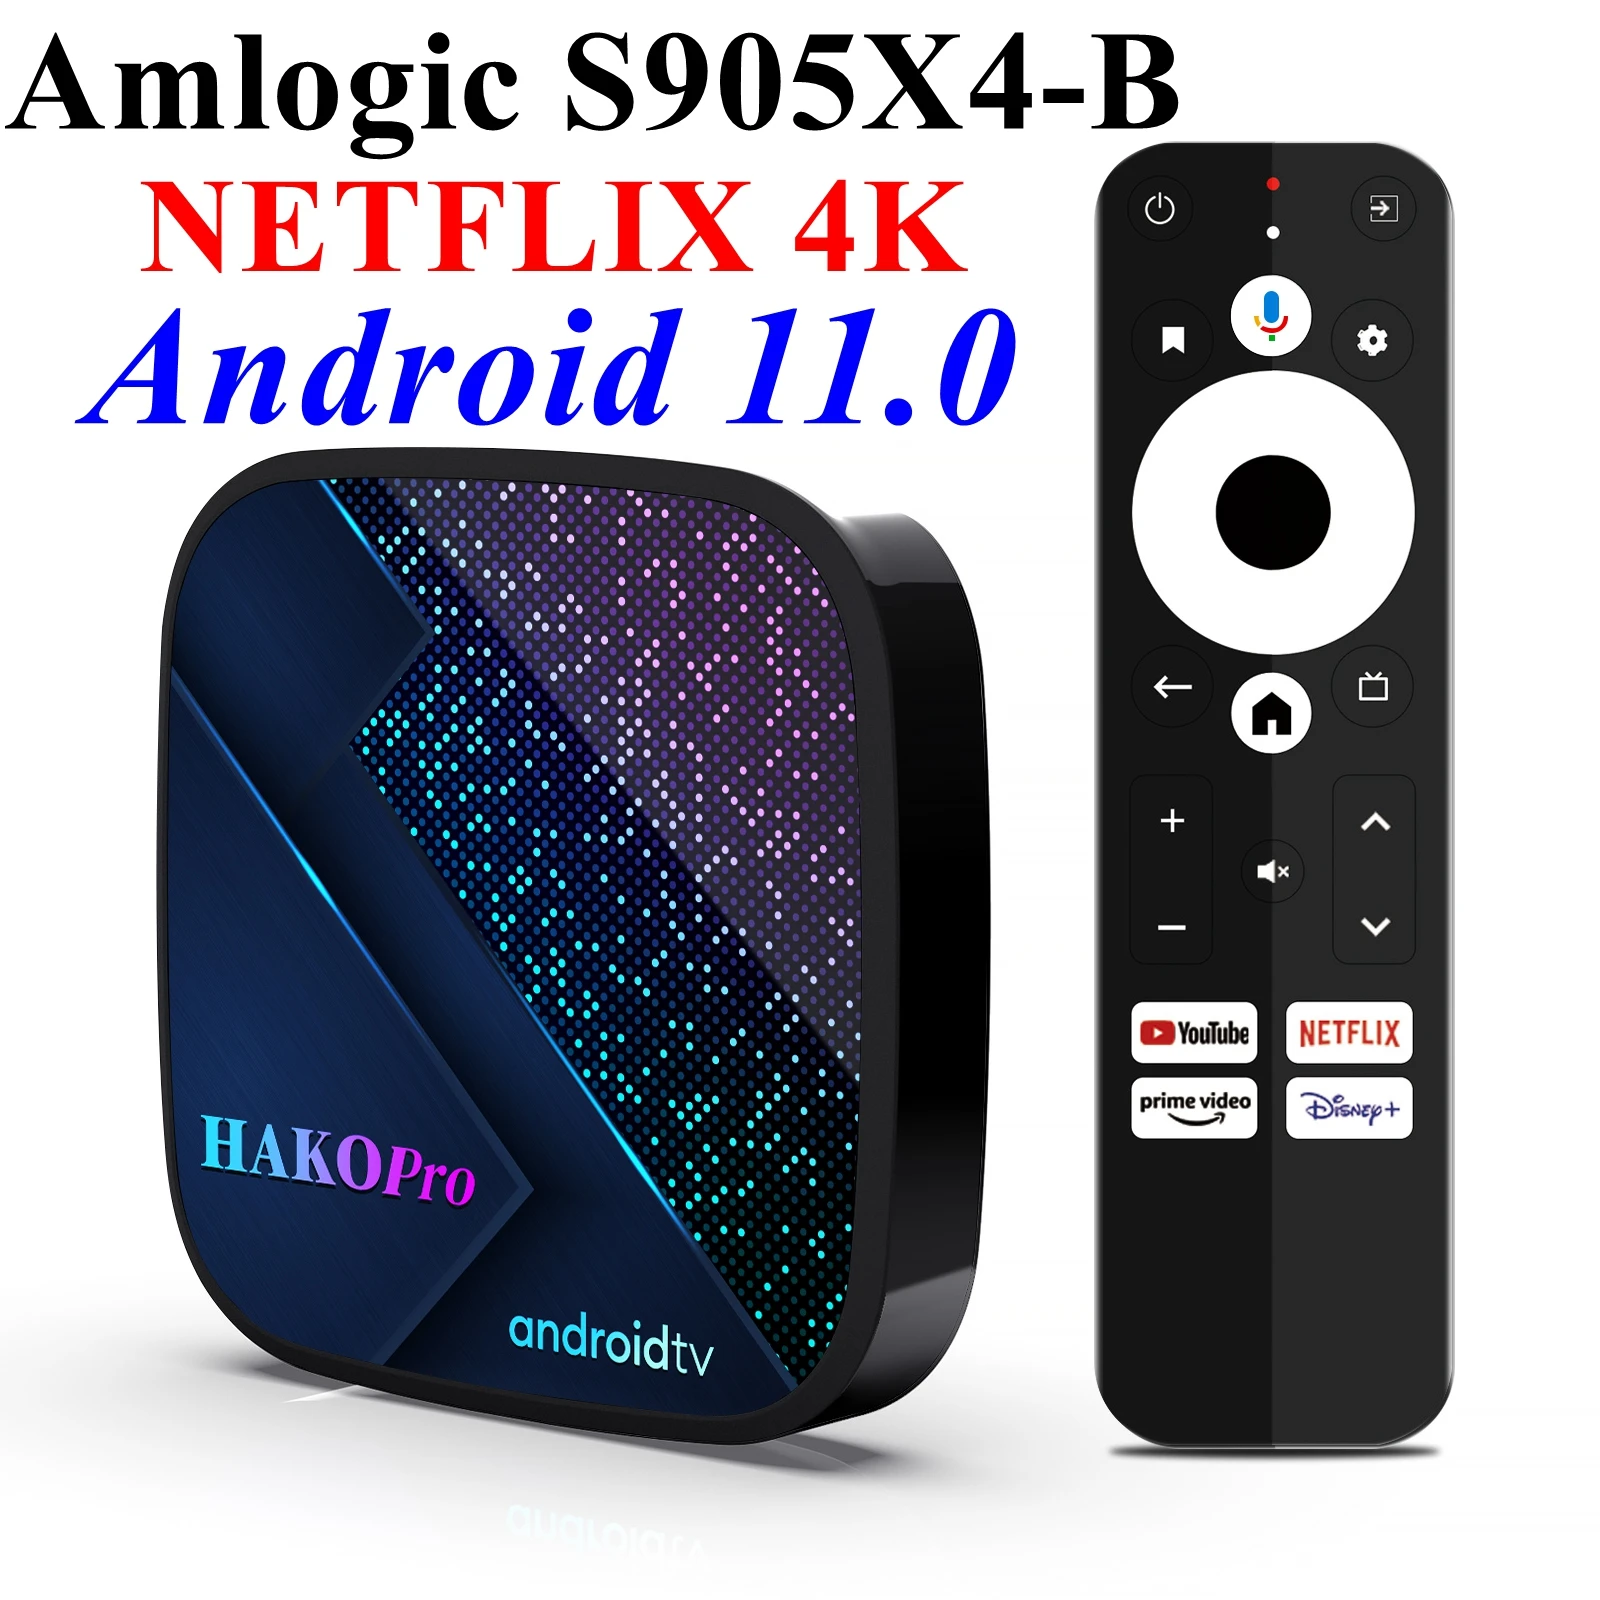 

HAKO Pro Smart TV Box Android 11 Amlogic S905Y4 2GB DDR4 16GB Google Certified Netflix AV1 1080P H.265 4K 60pfs 5G Dual Wifi